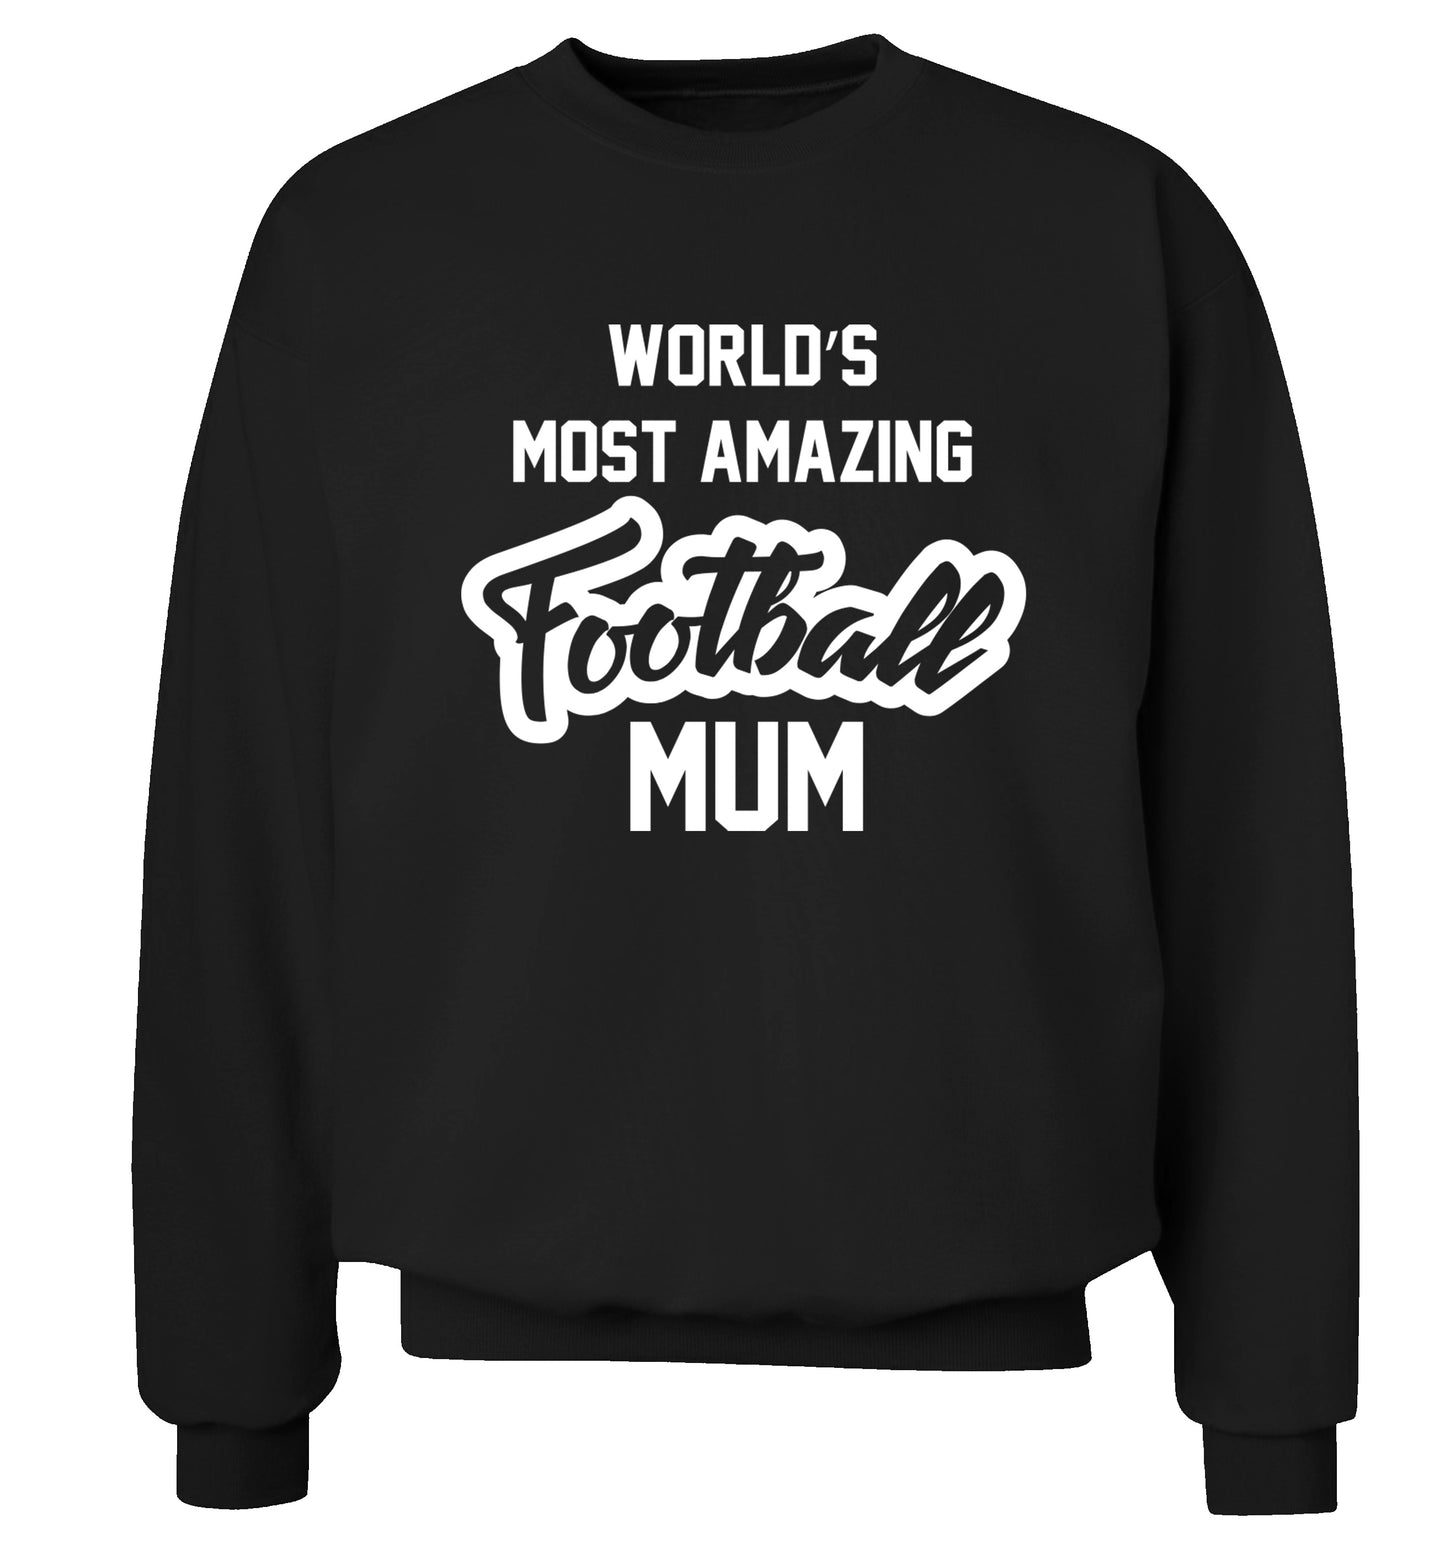 Worlds most amazing football mum Adult's unisexblack Sweater 2XL